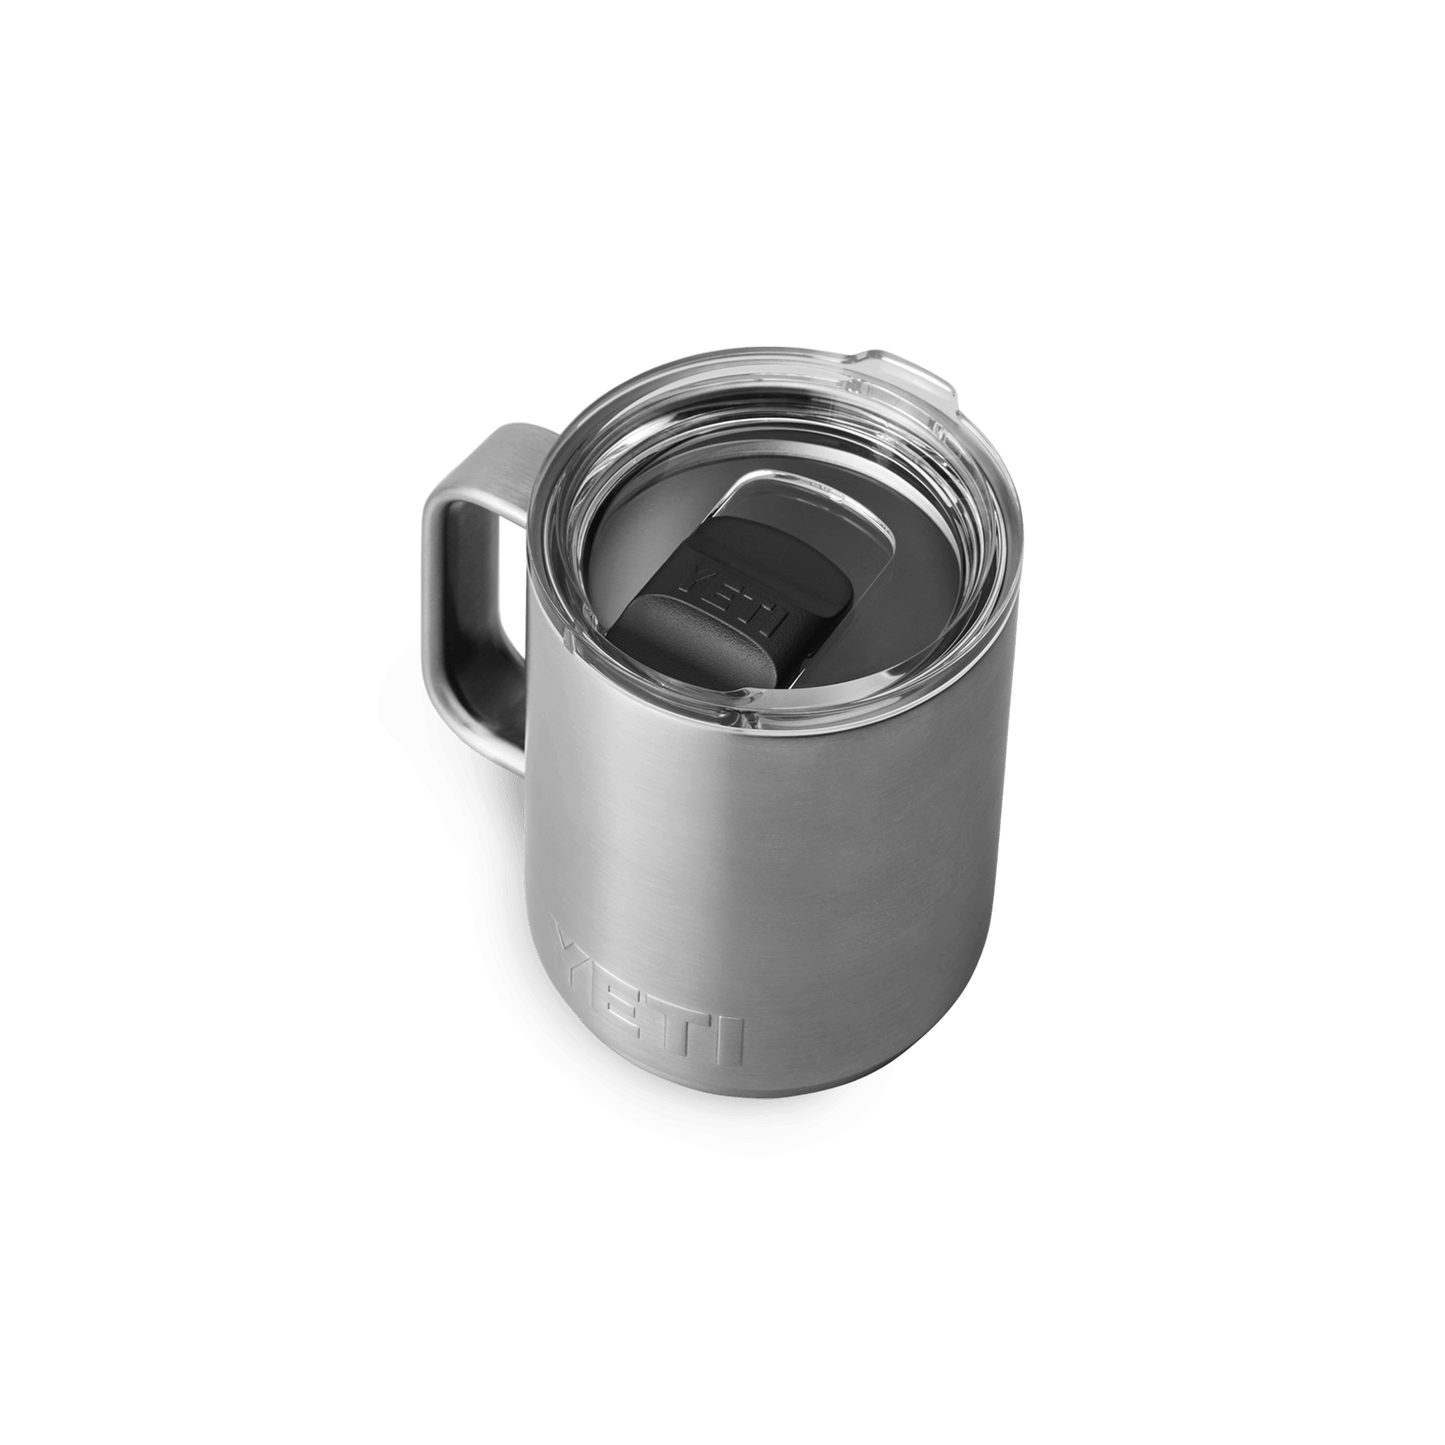 Rambler® 10 oz Mug